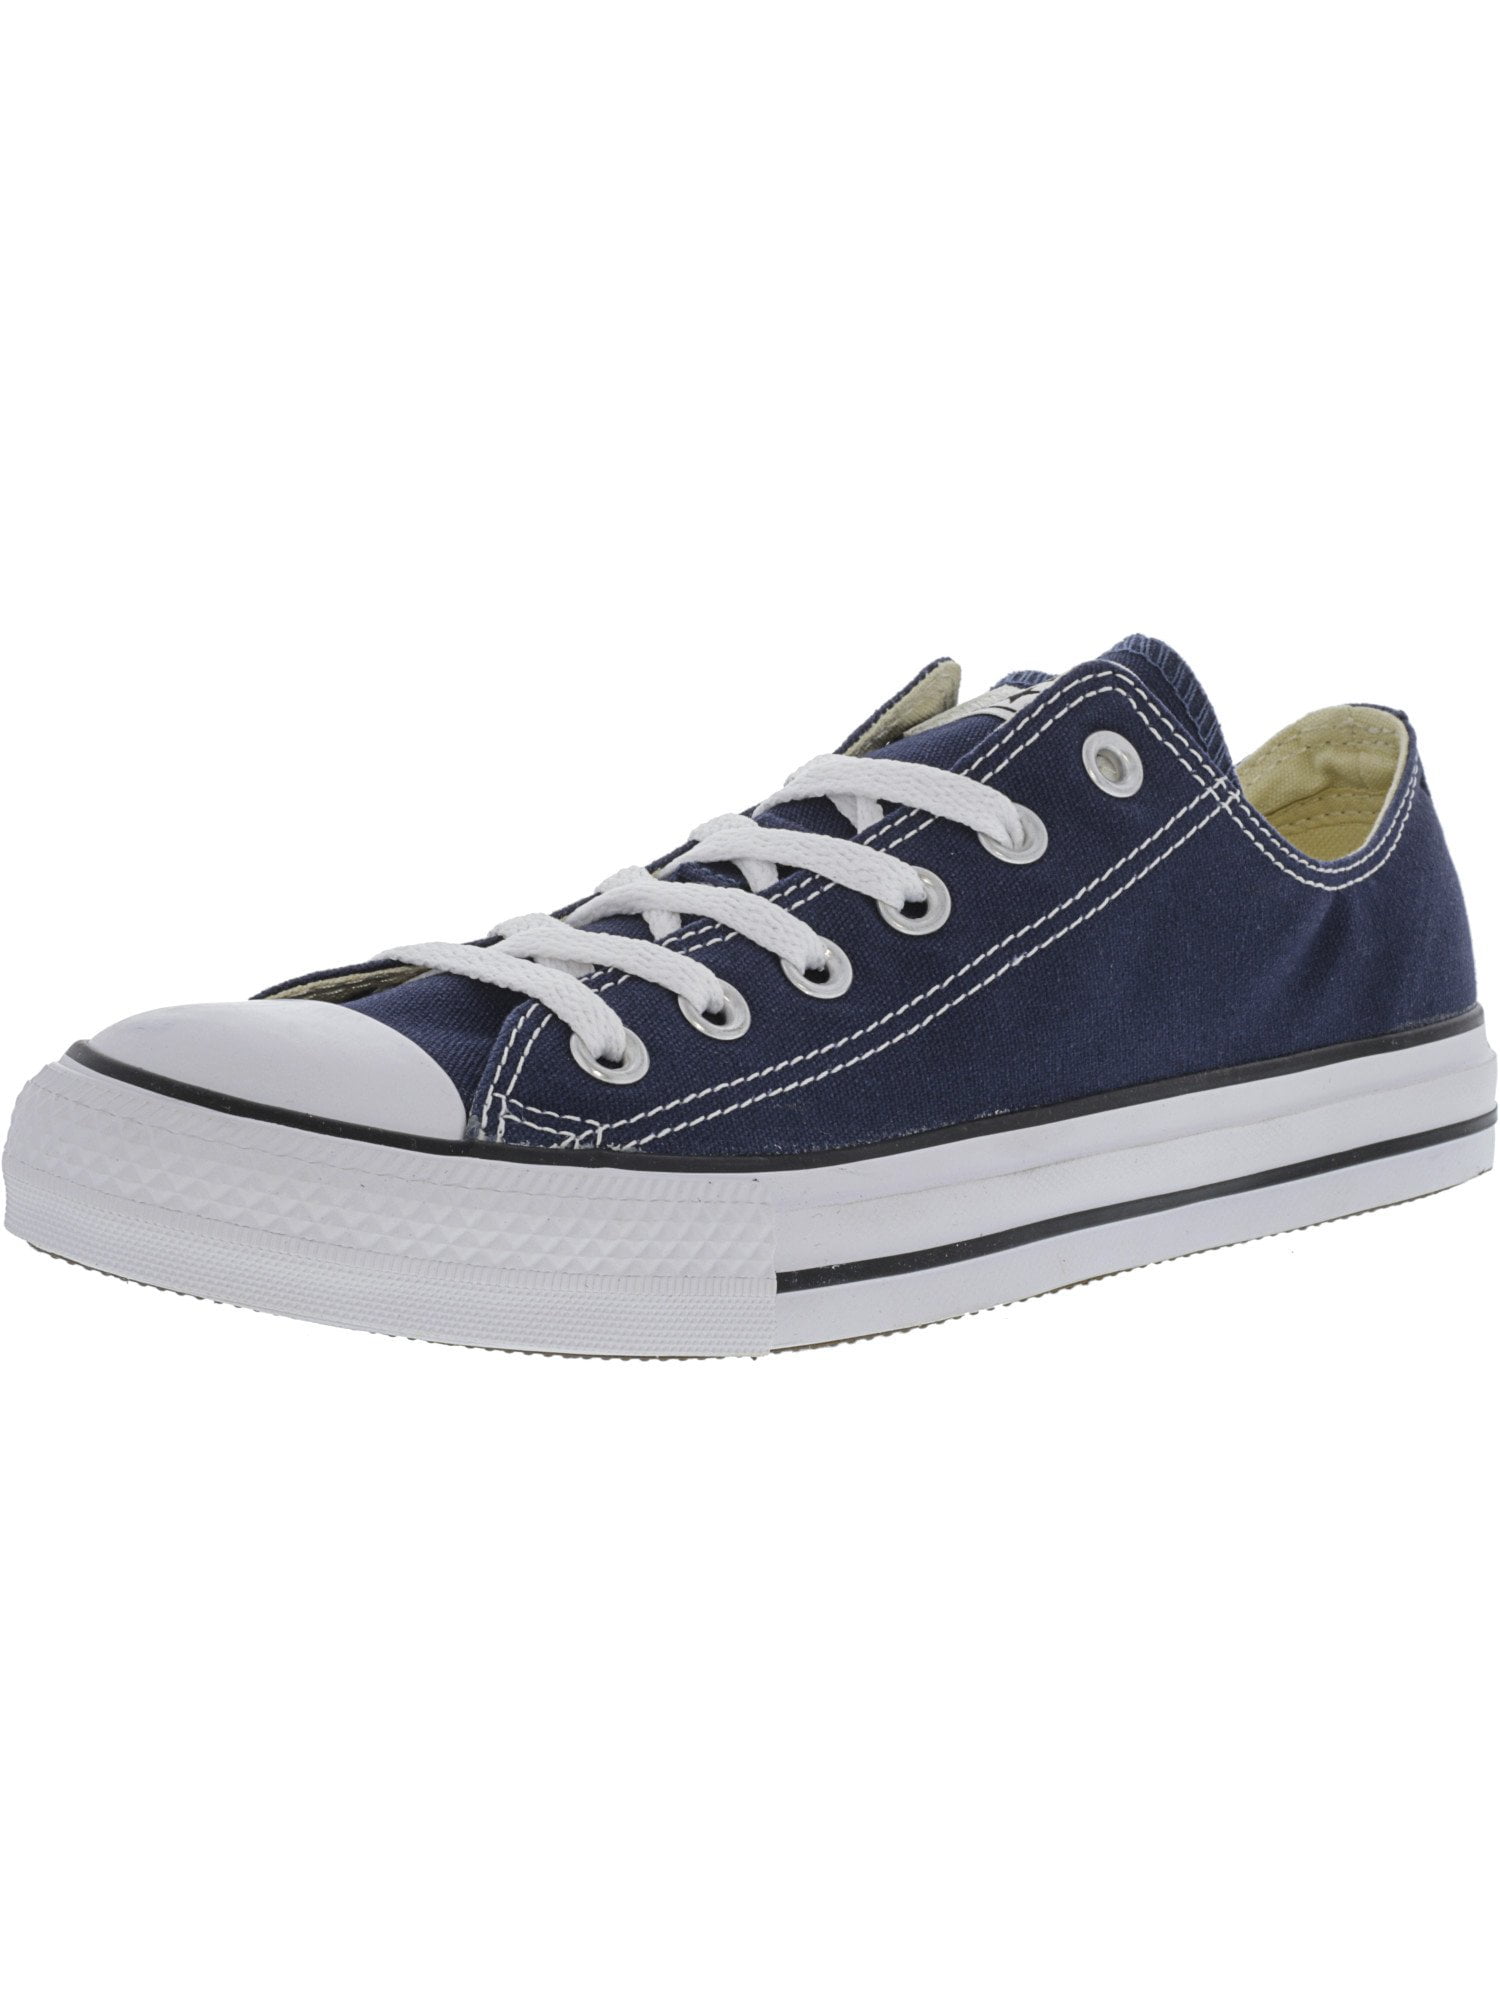 Converse All Star Ox Navy Ankle-High Fashion Sneaker - Walmart.com